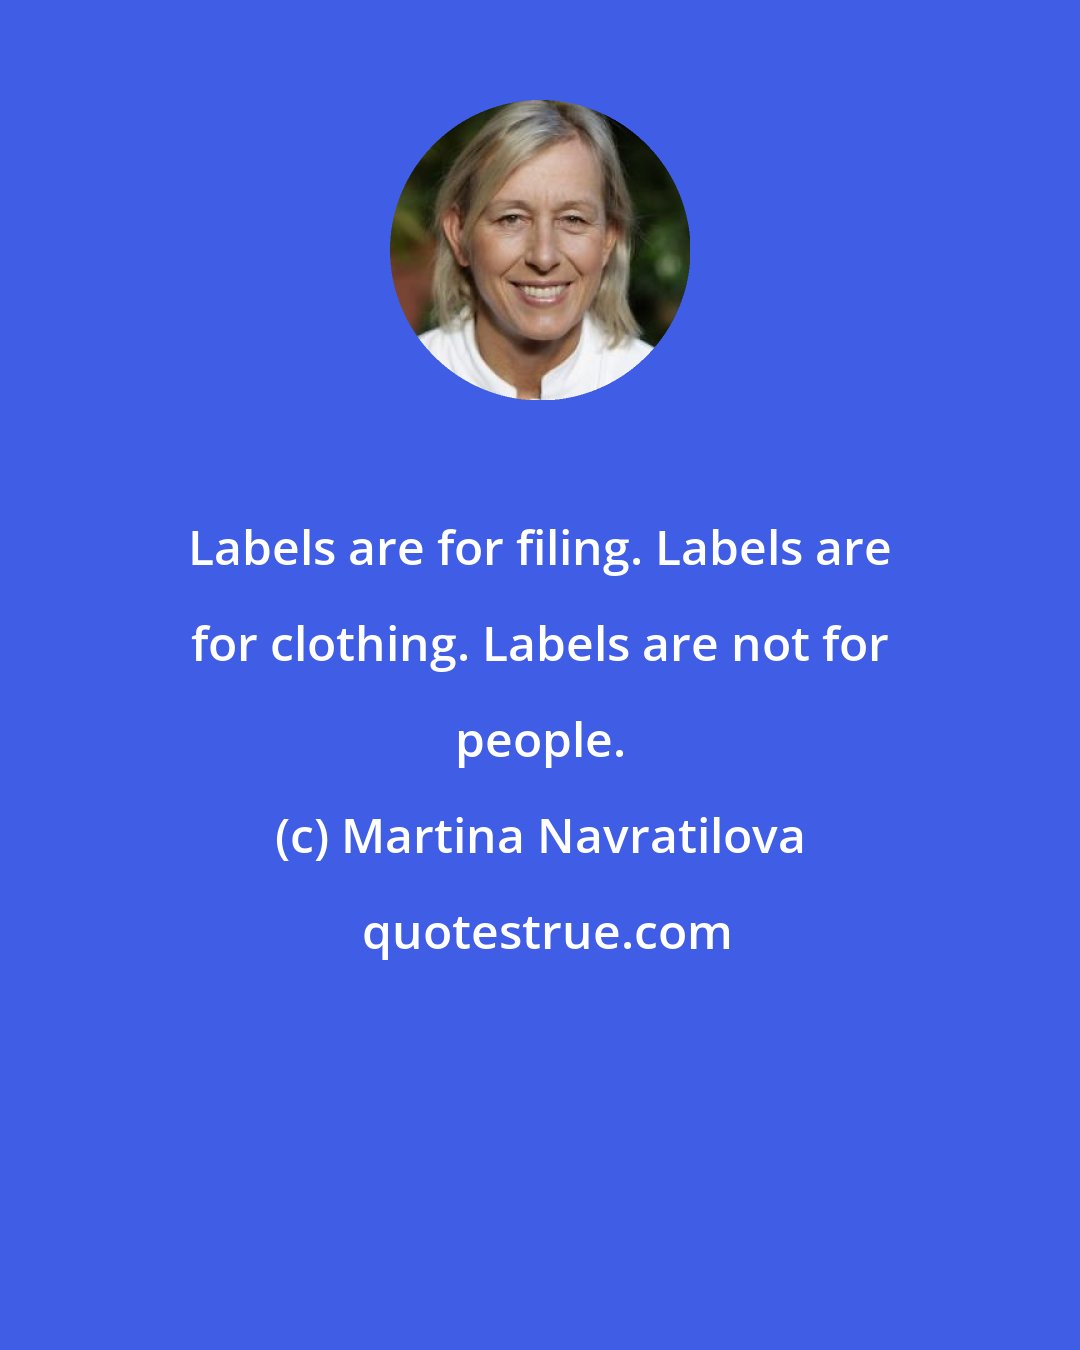 Martina Navratilova: Labels are for filing. Labels are for clothing. Labels are not for people.